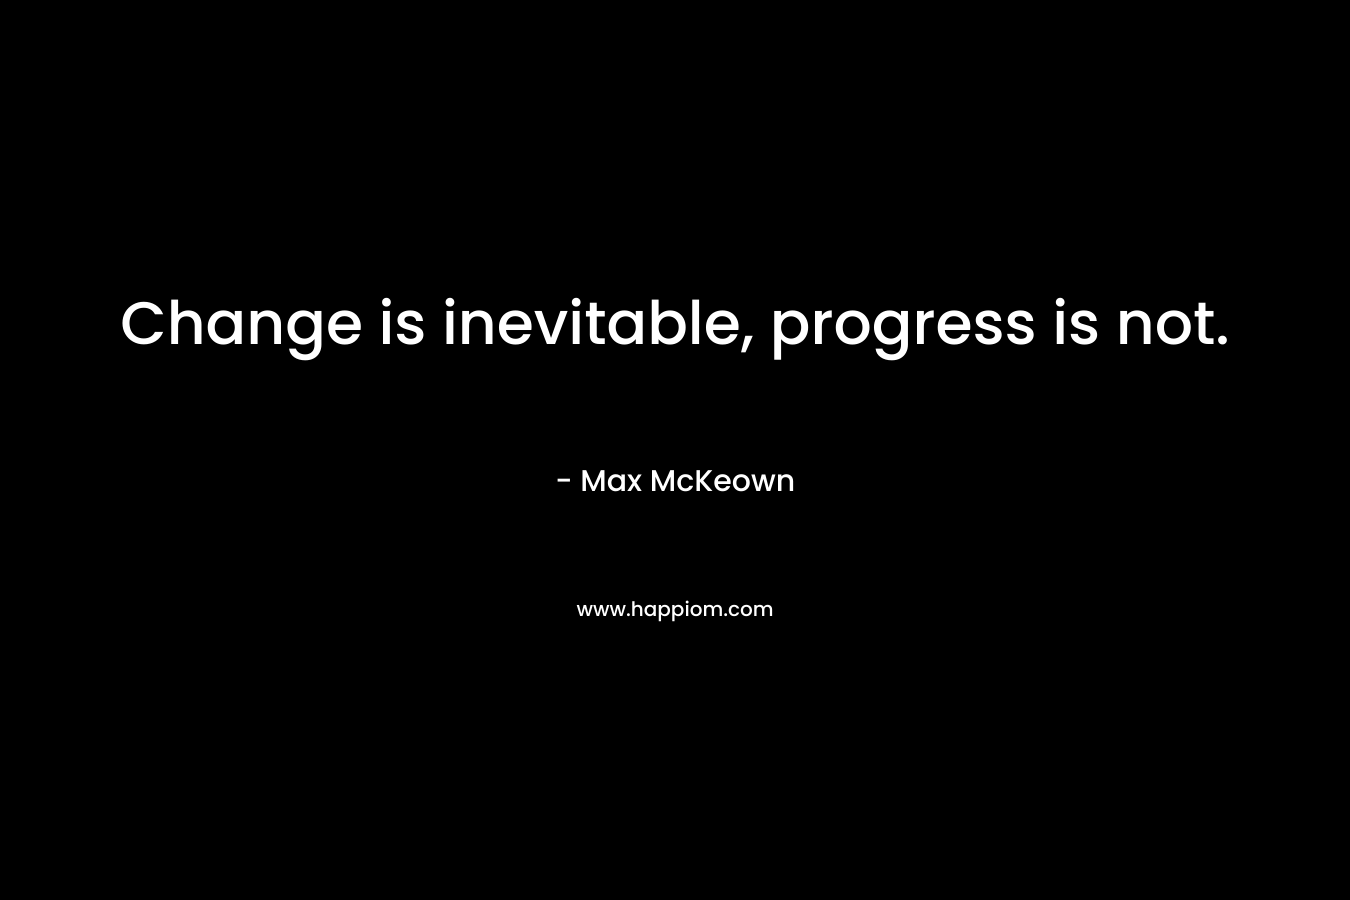 Change is inevitable, progress is not.